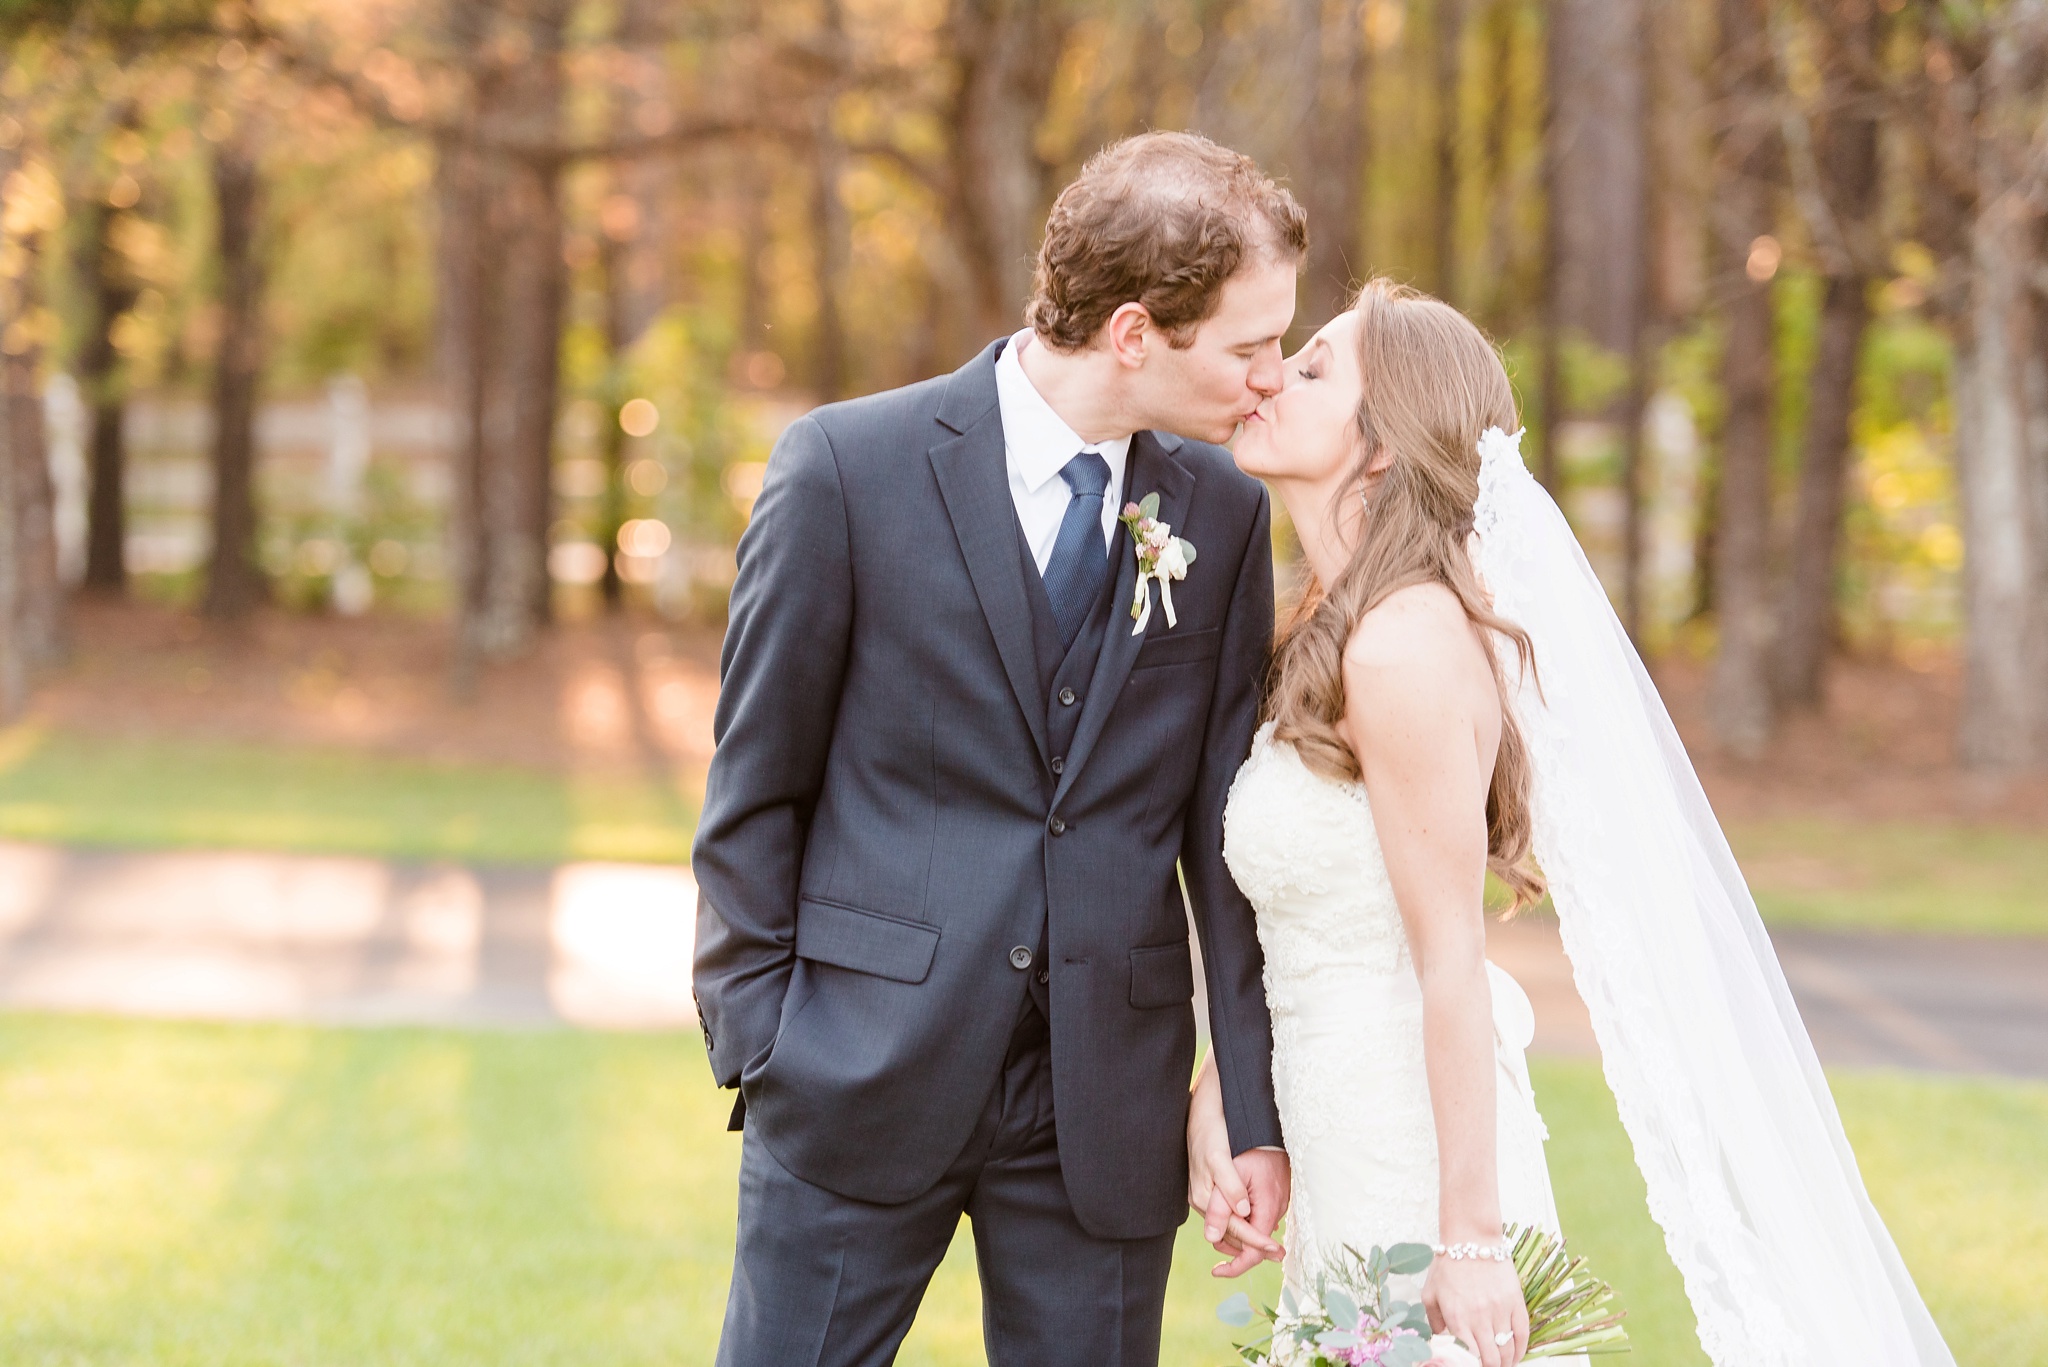 Sonnet House Blush and Gold Spring Wedding | Birmingham Alabama Wedding Photographers_0072.jpg